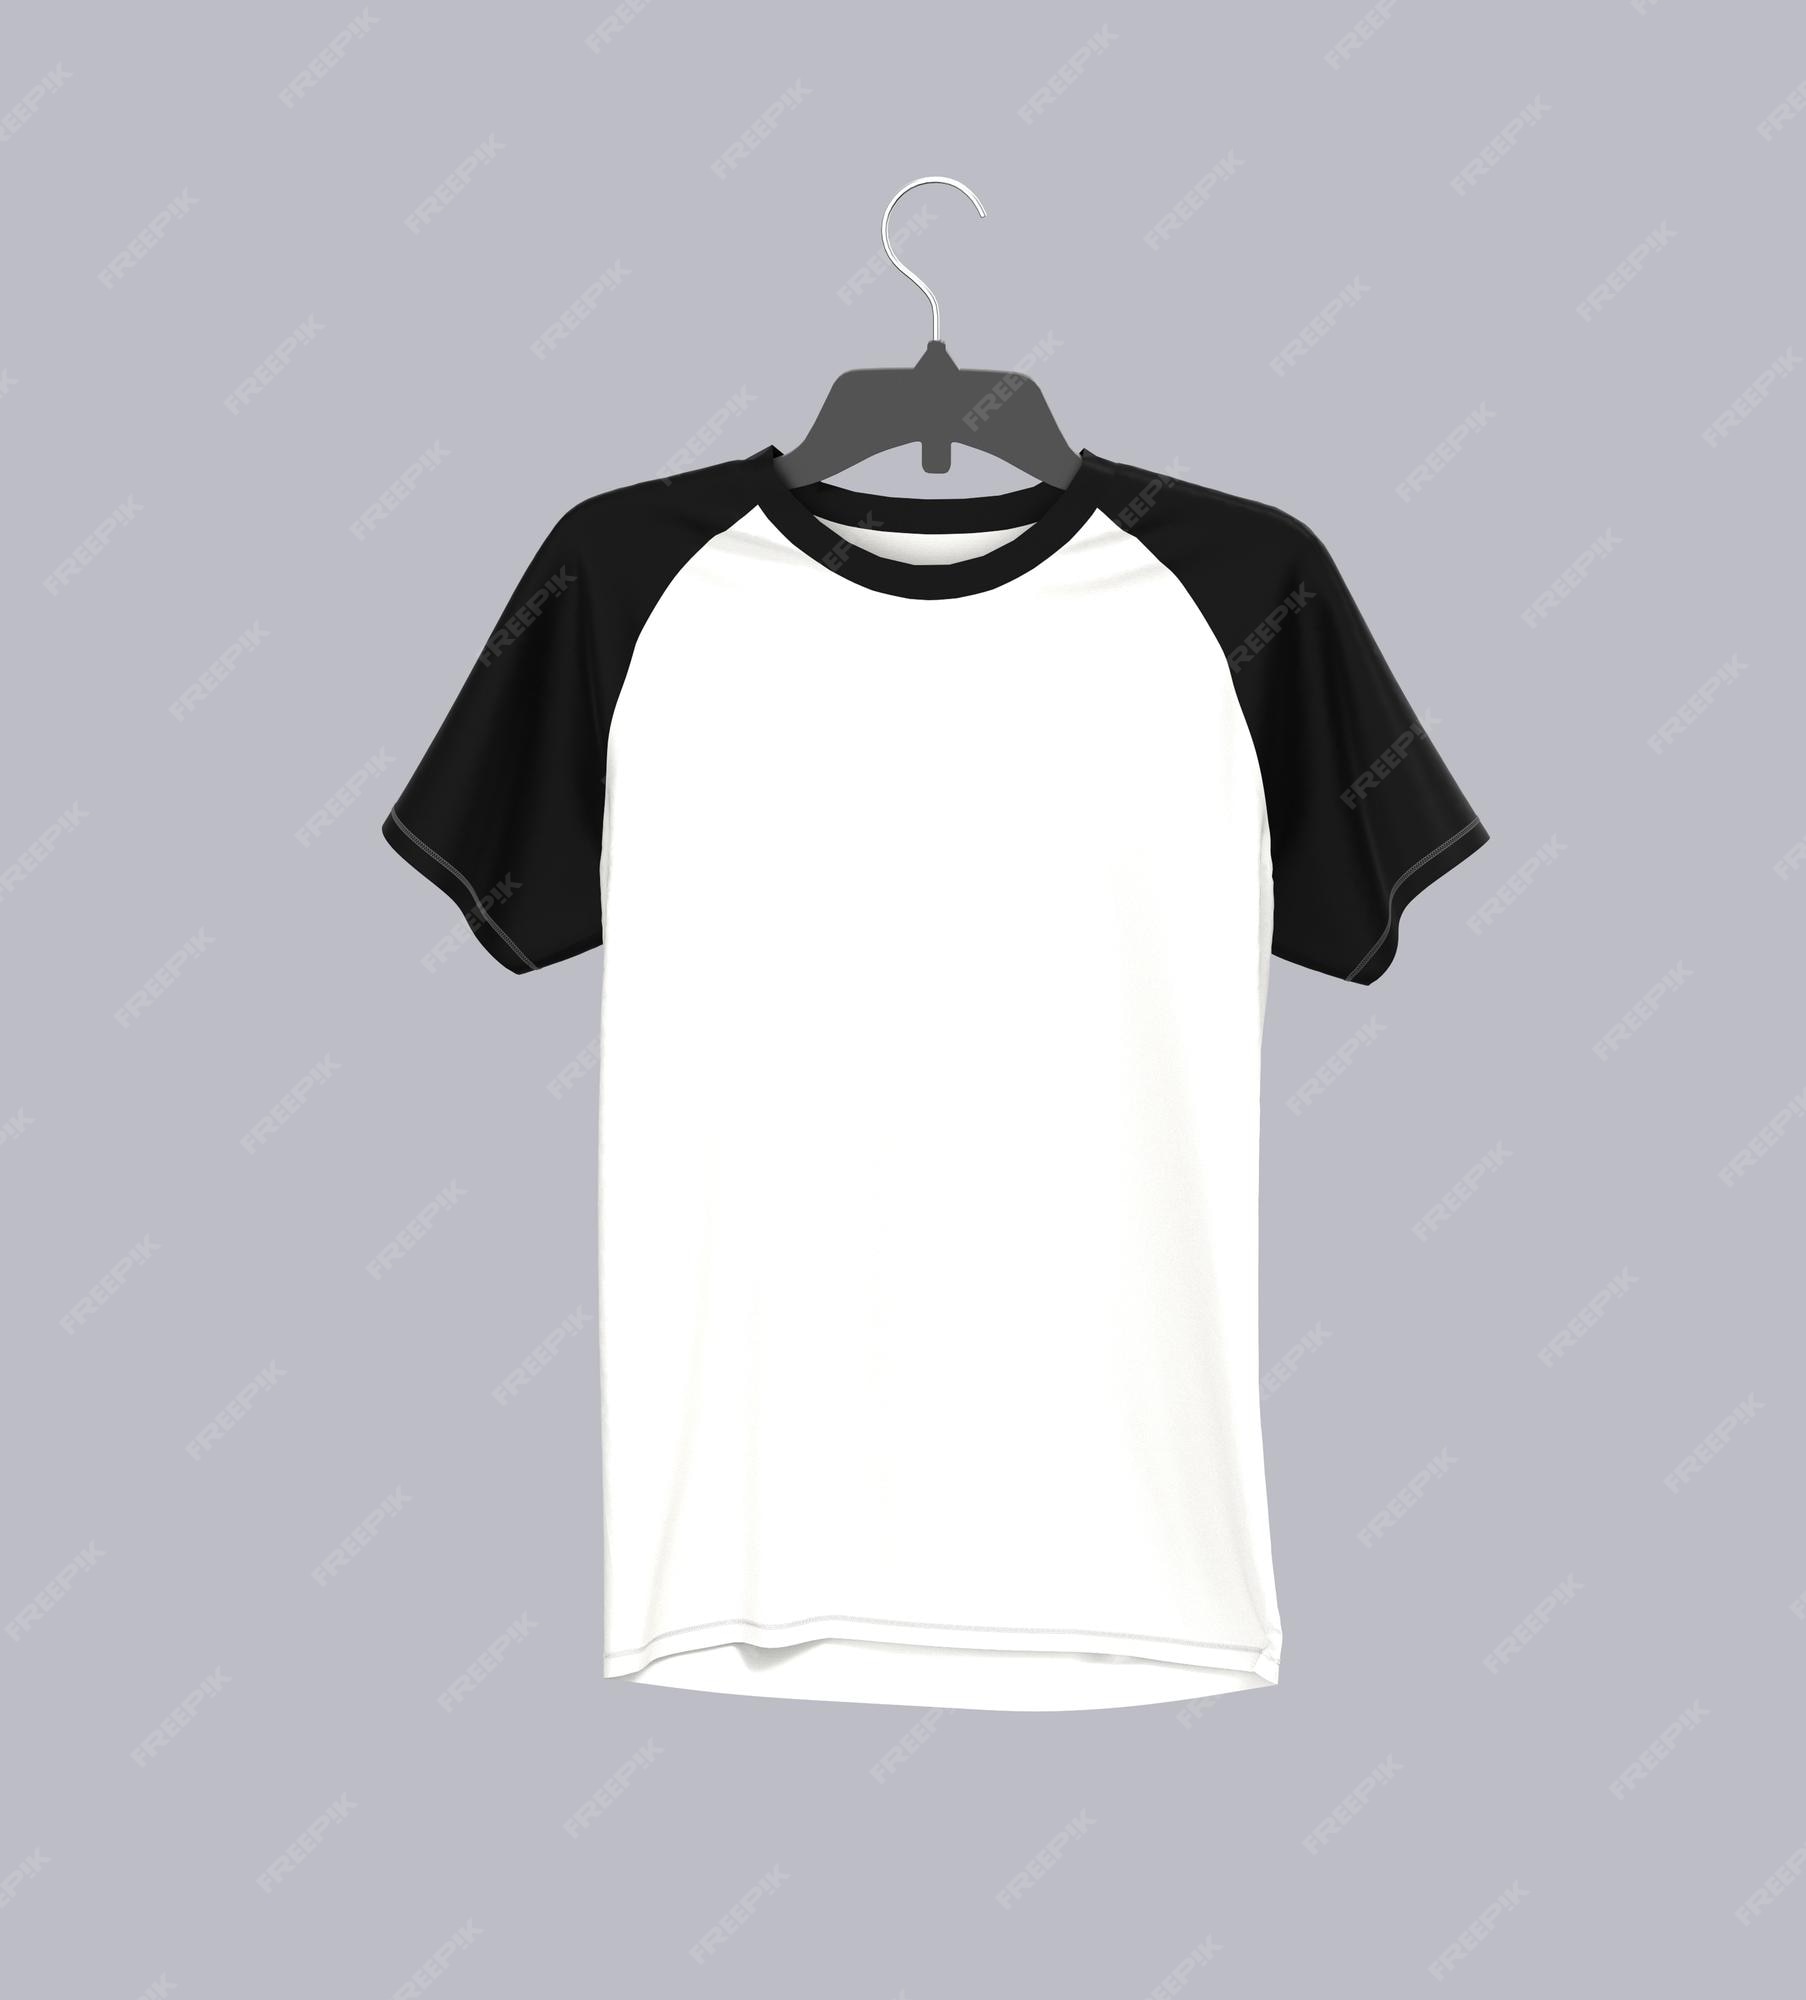 Camiseta blanca con mangas negras Foto